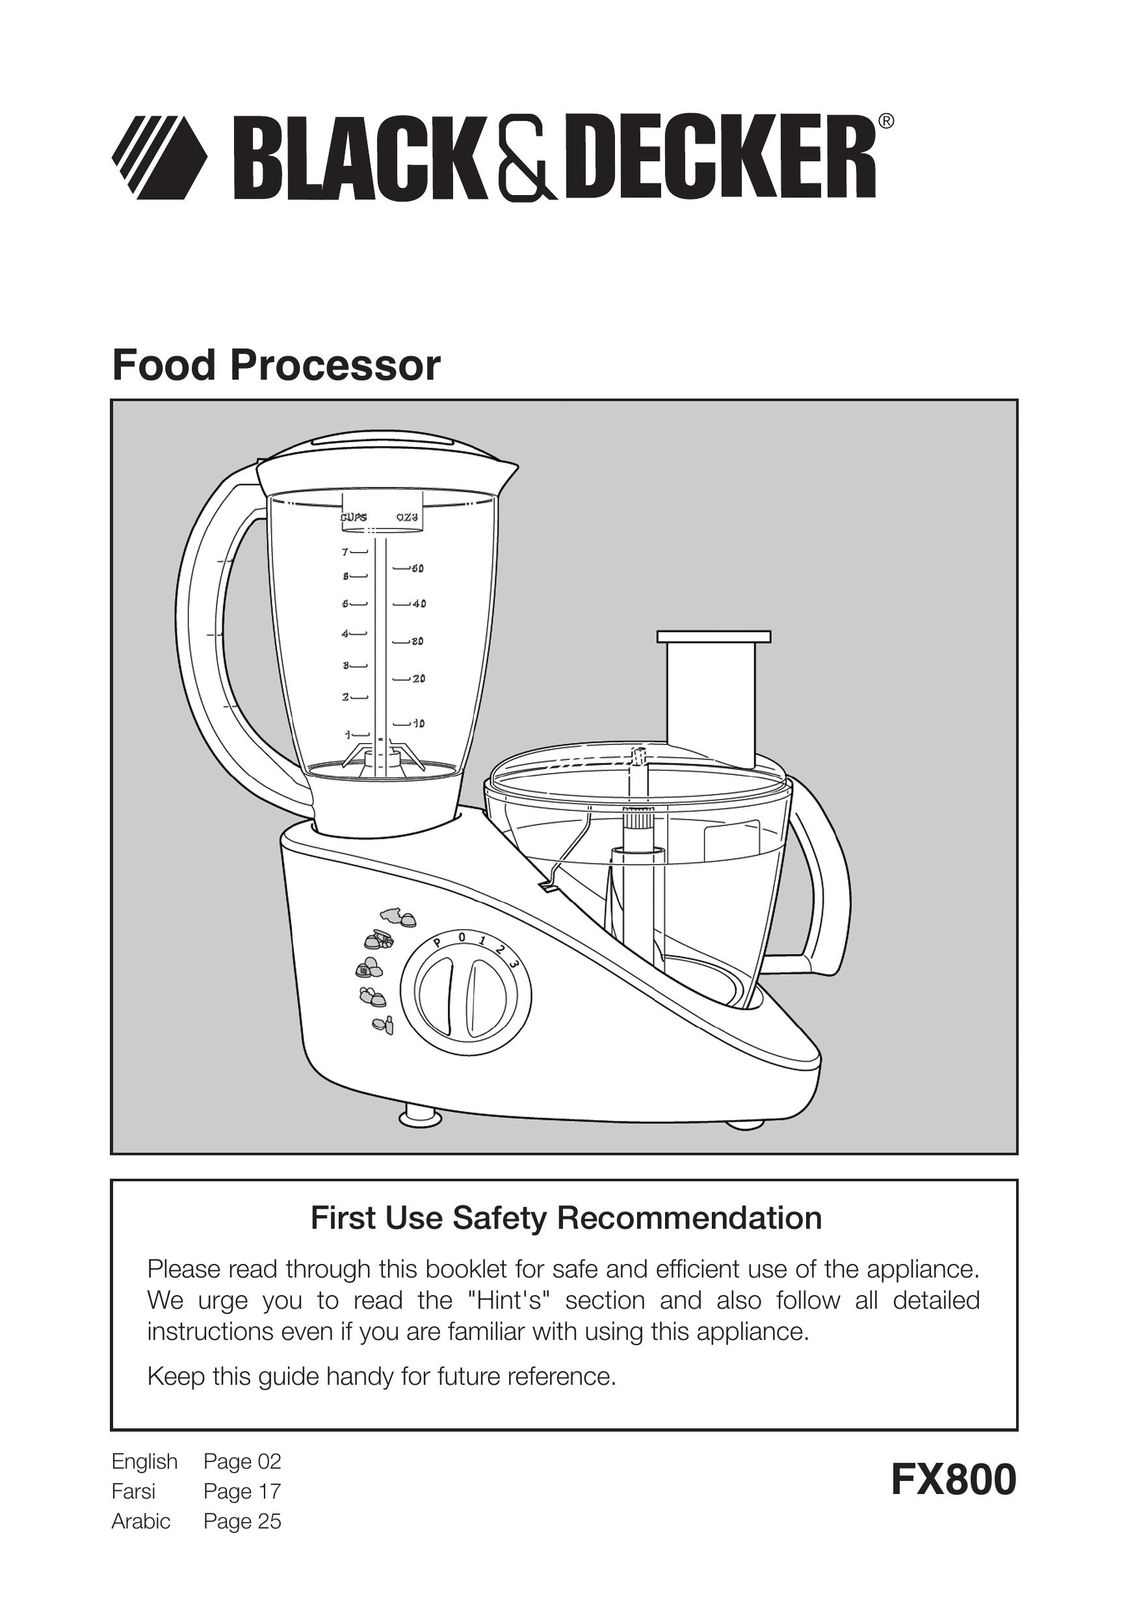 Black & Decker FX800 Food Processor User Manual